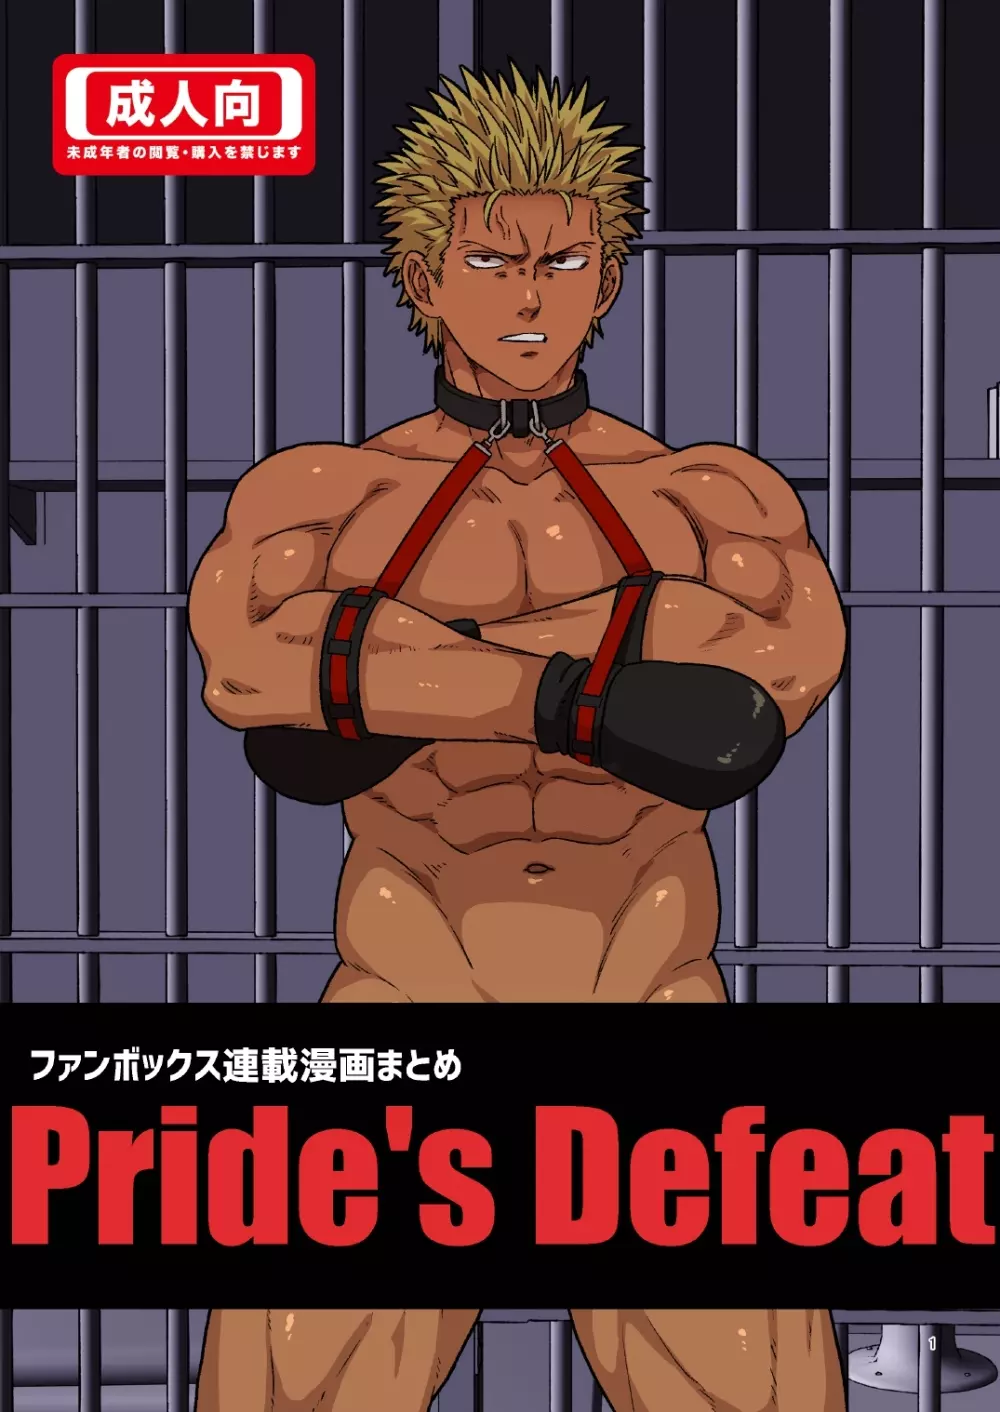 Pride’s Defeat